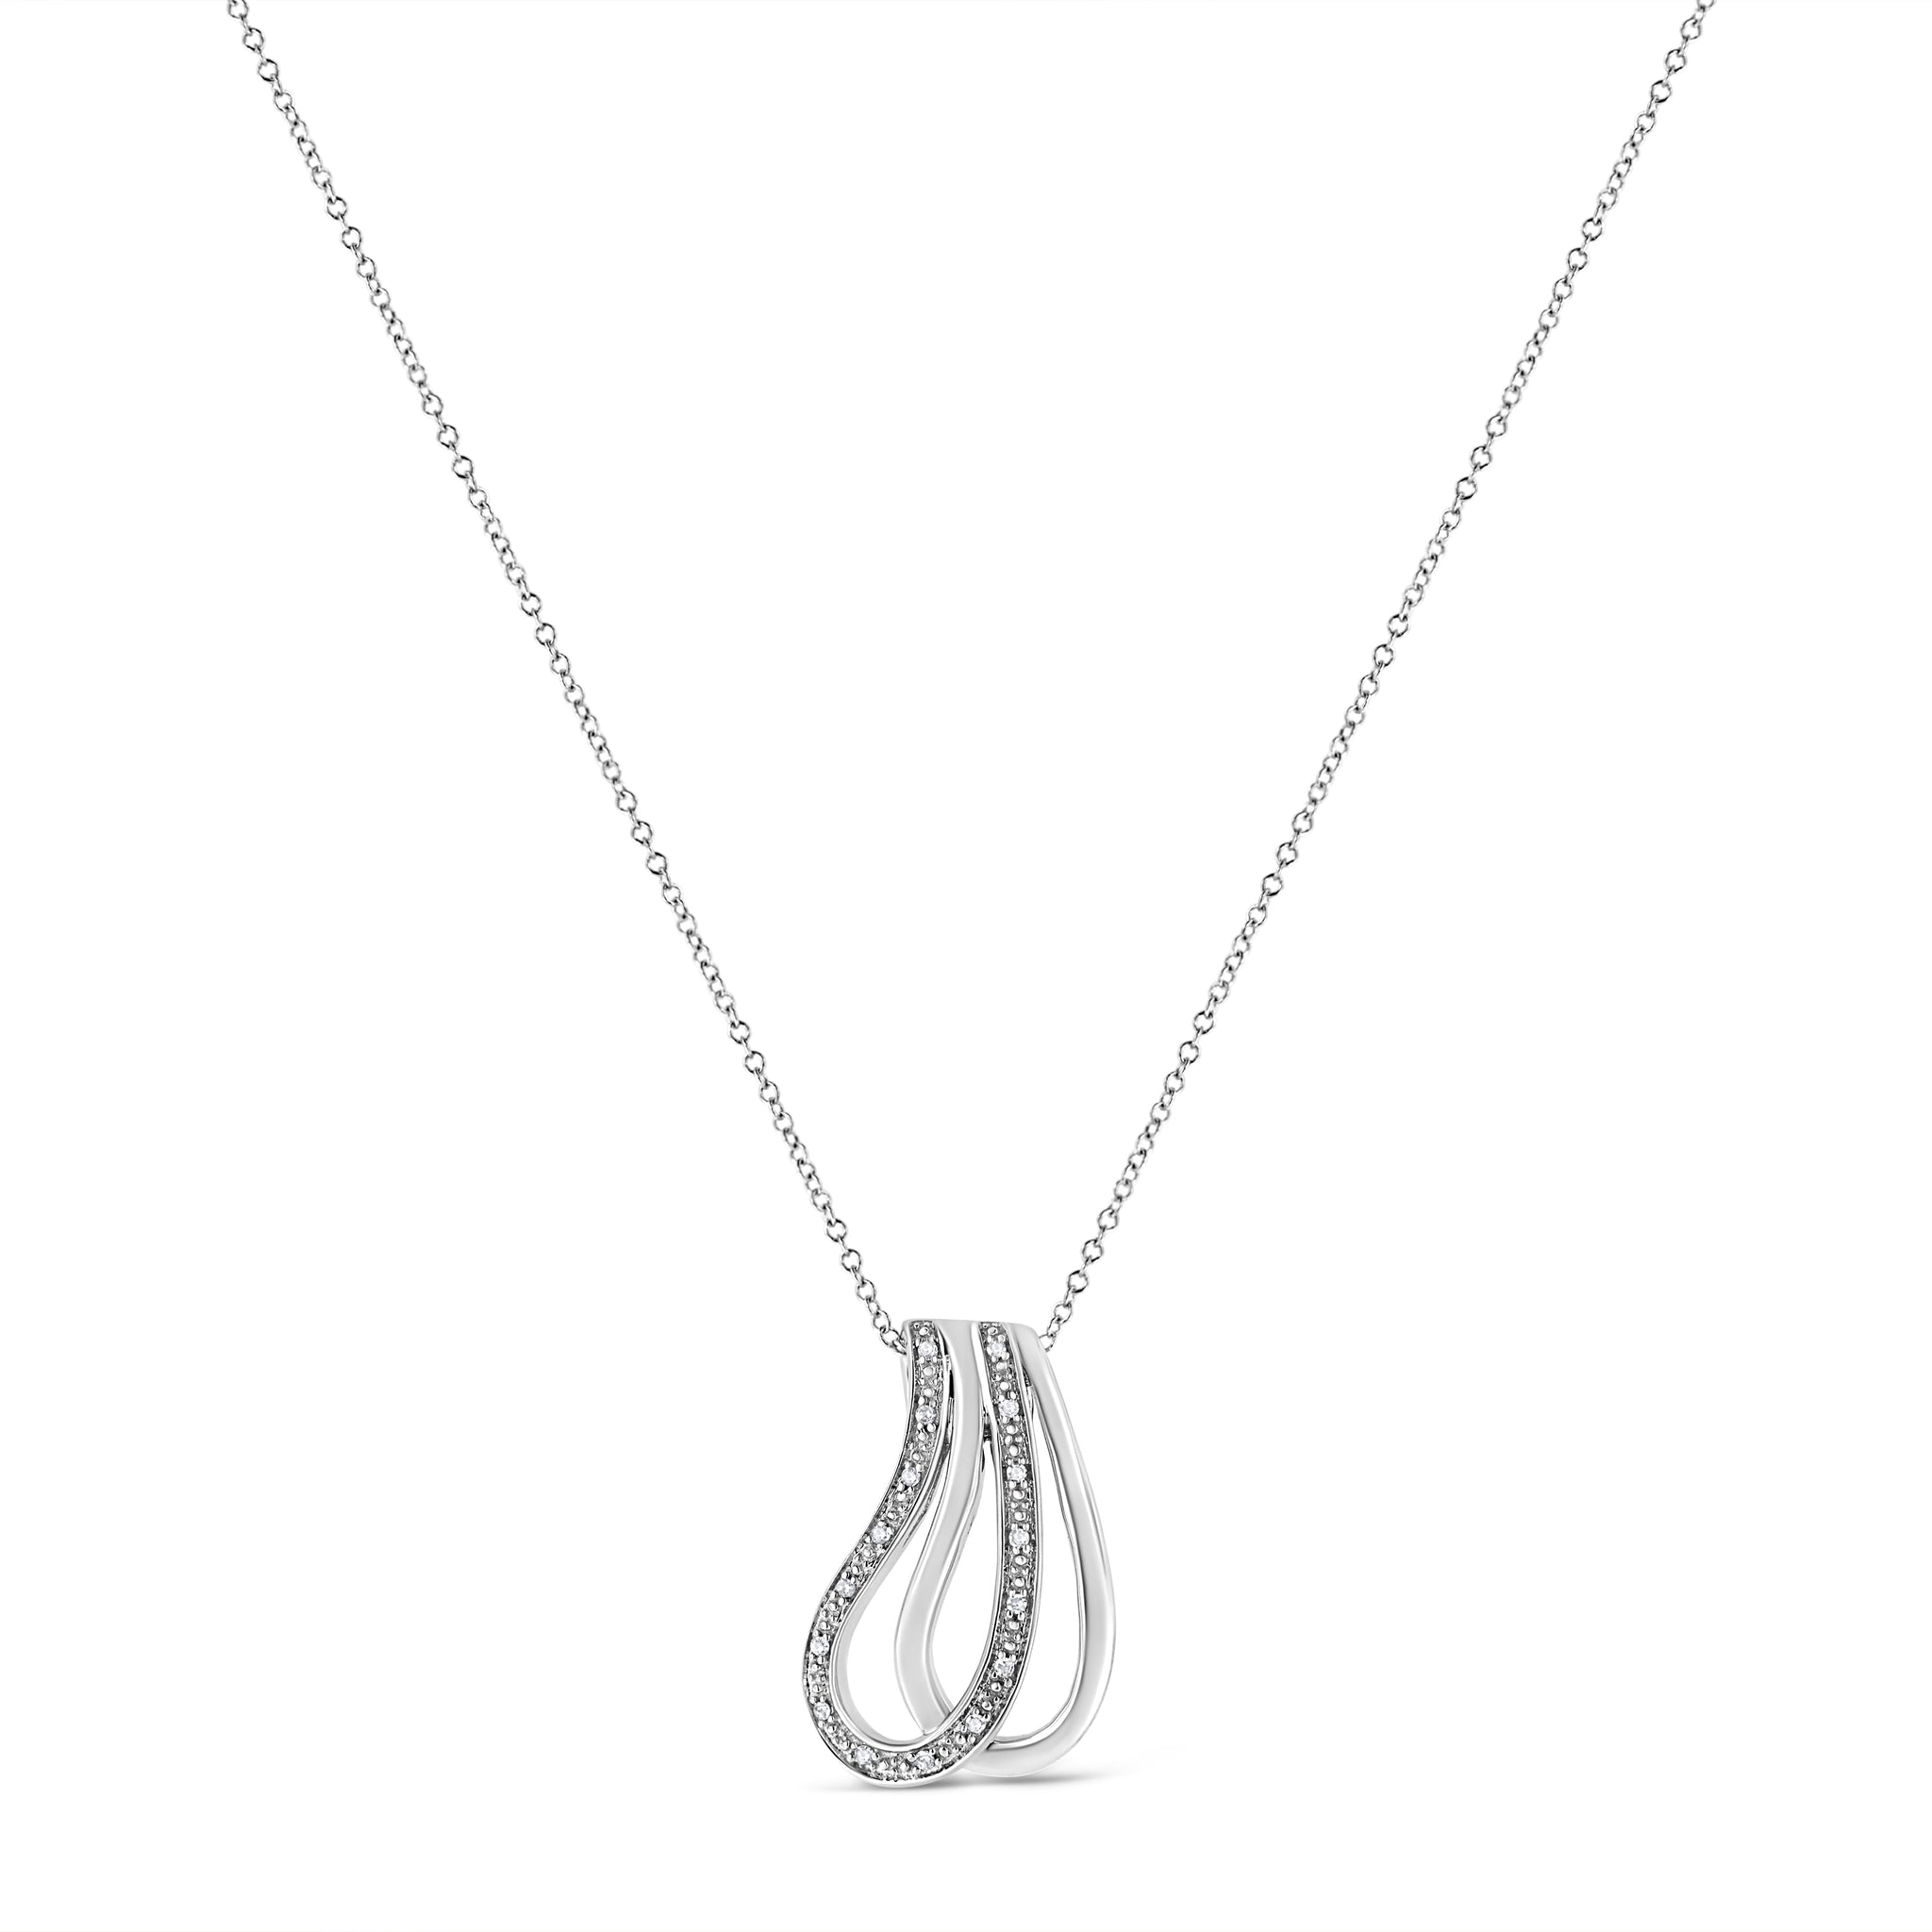 .925 Sterling Silver Pave-Set Diamond Accent Double Curve 18" Pendant Necklace (I-J Color, I1-I2 Clarity)-1